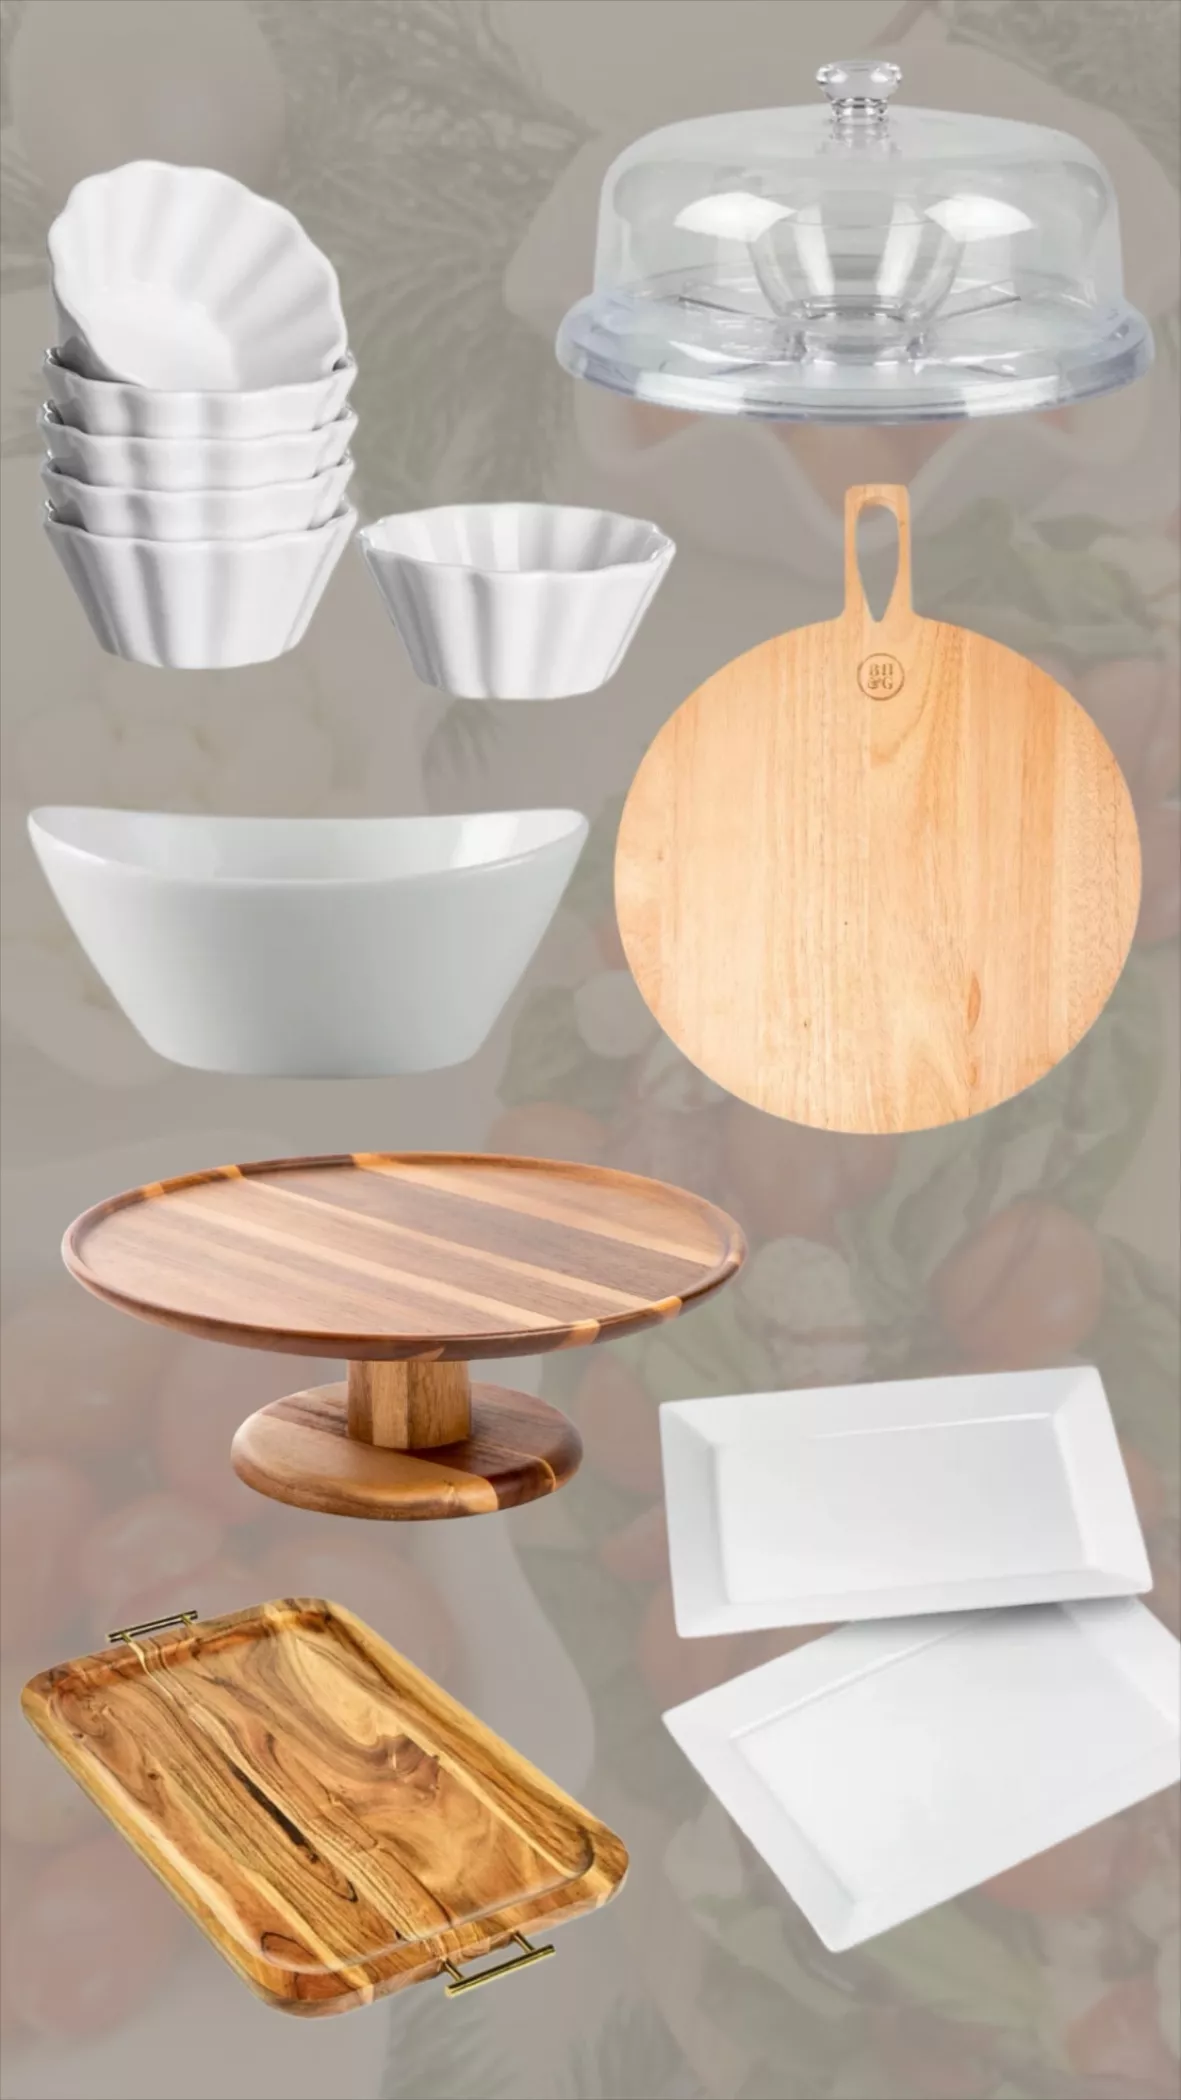 Better Homes & Gardens Oval Porcelain Serve Bowls, White, Set of 4 